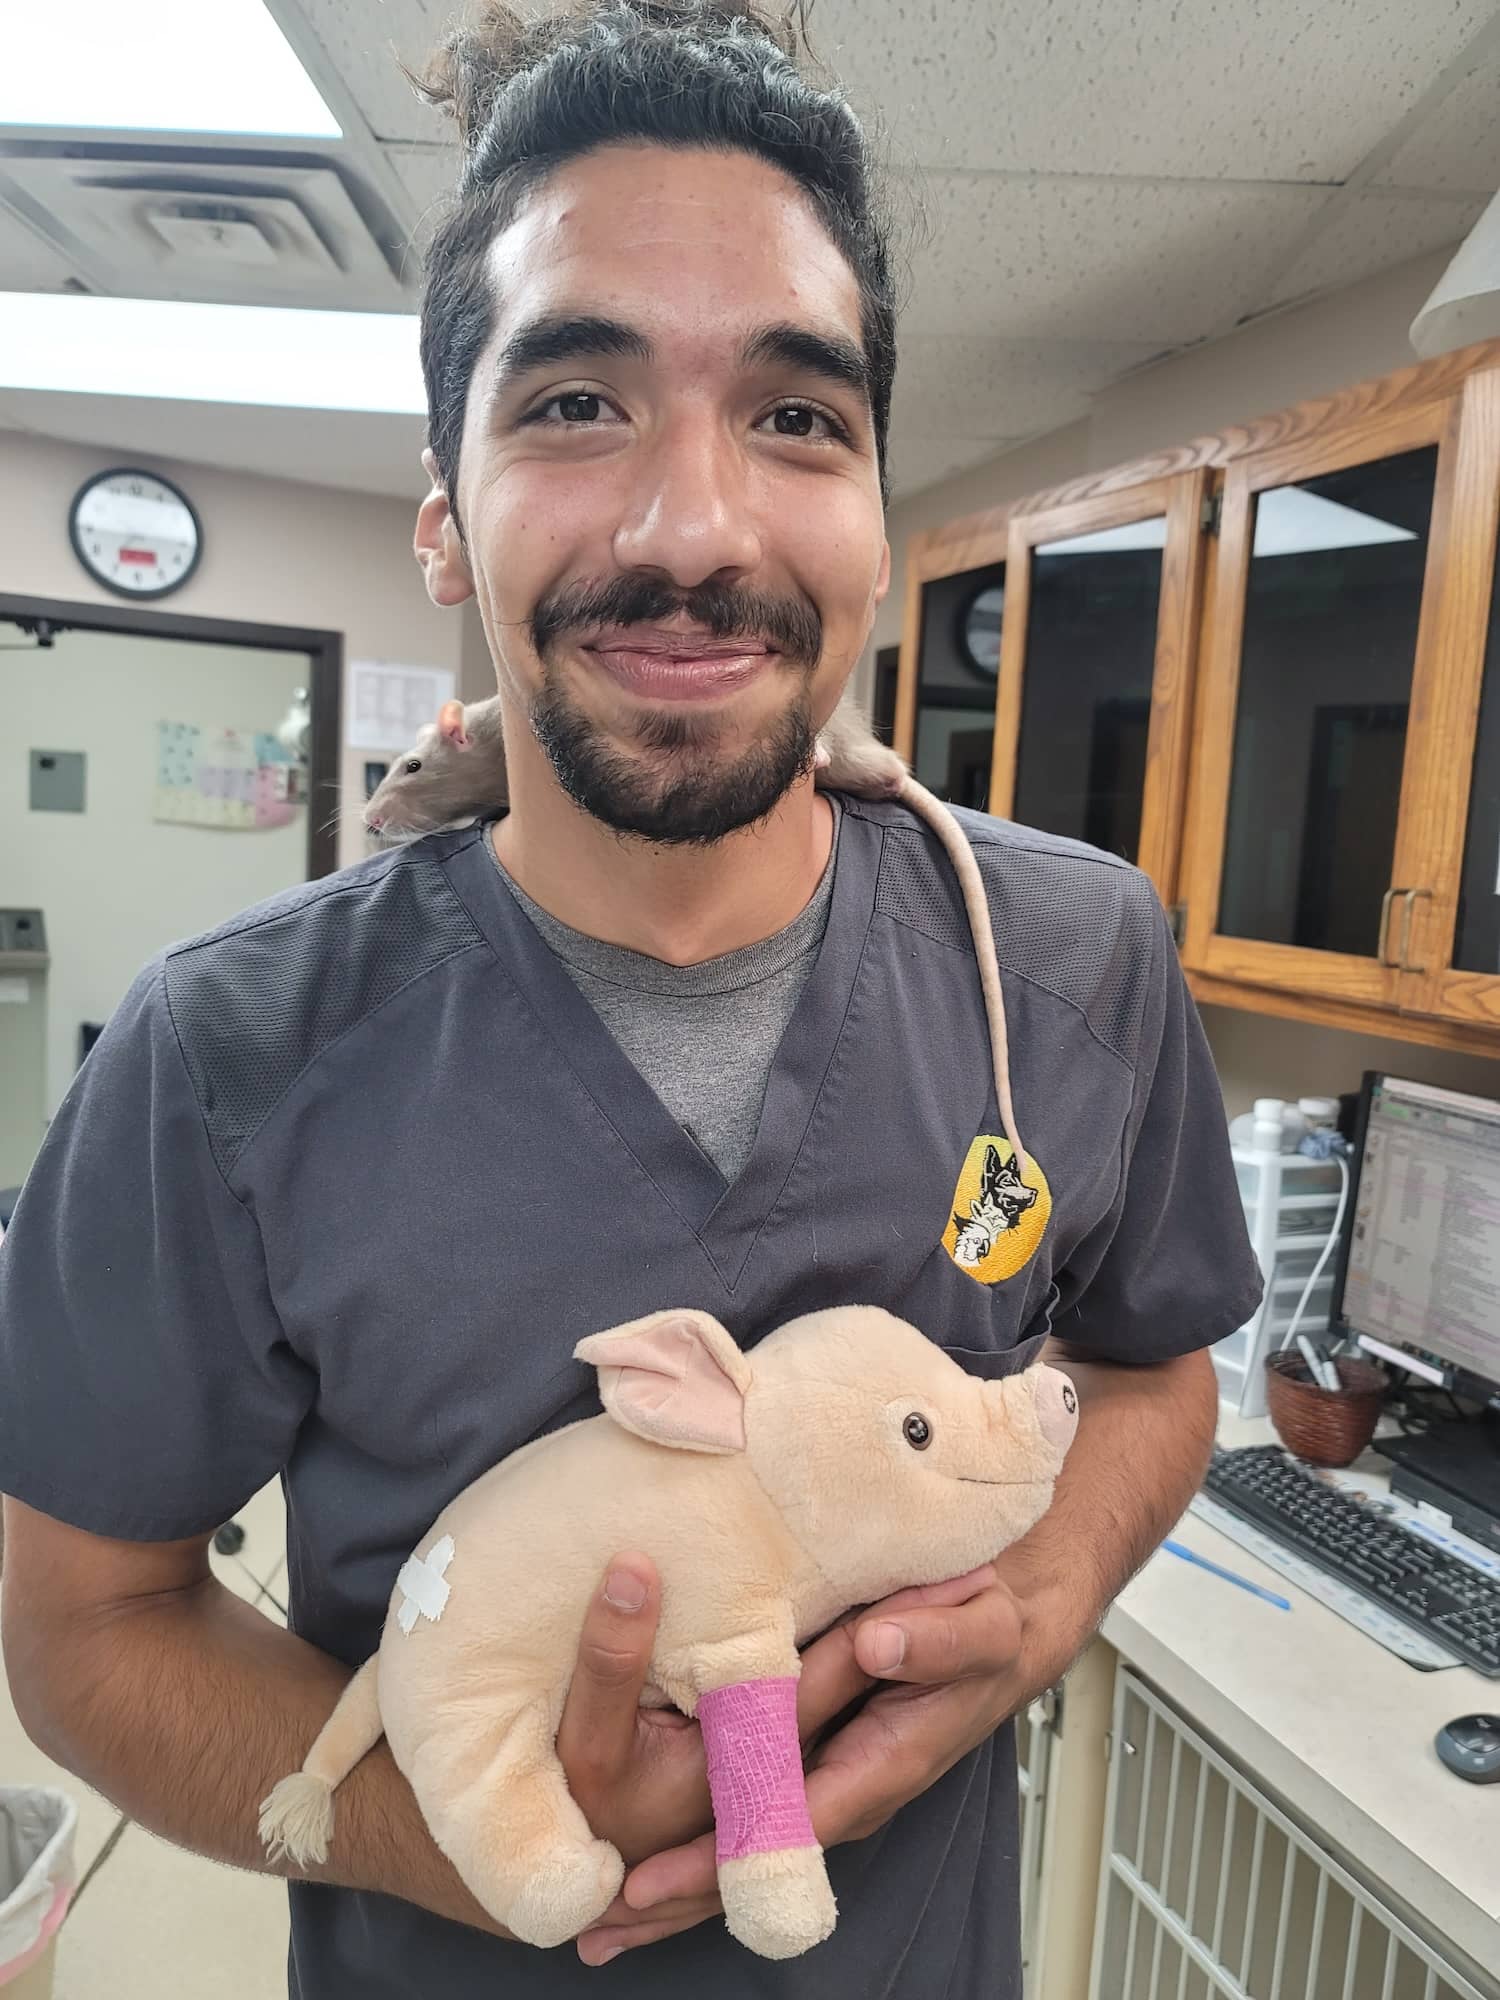 Staff member holding stuffed pig